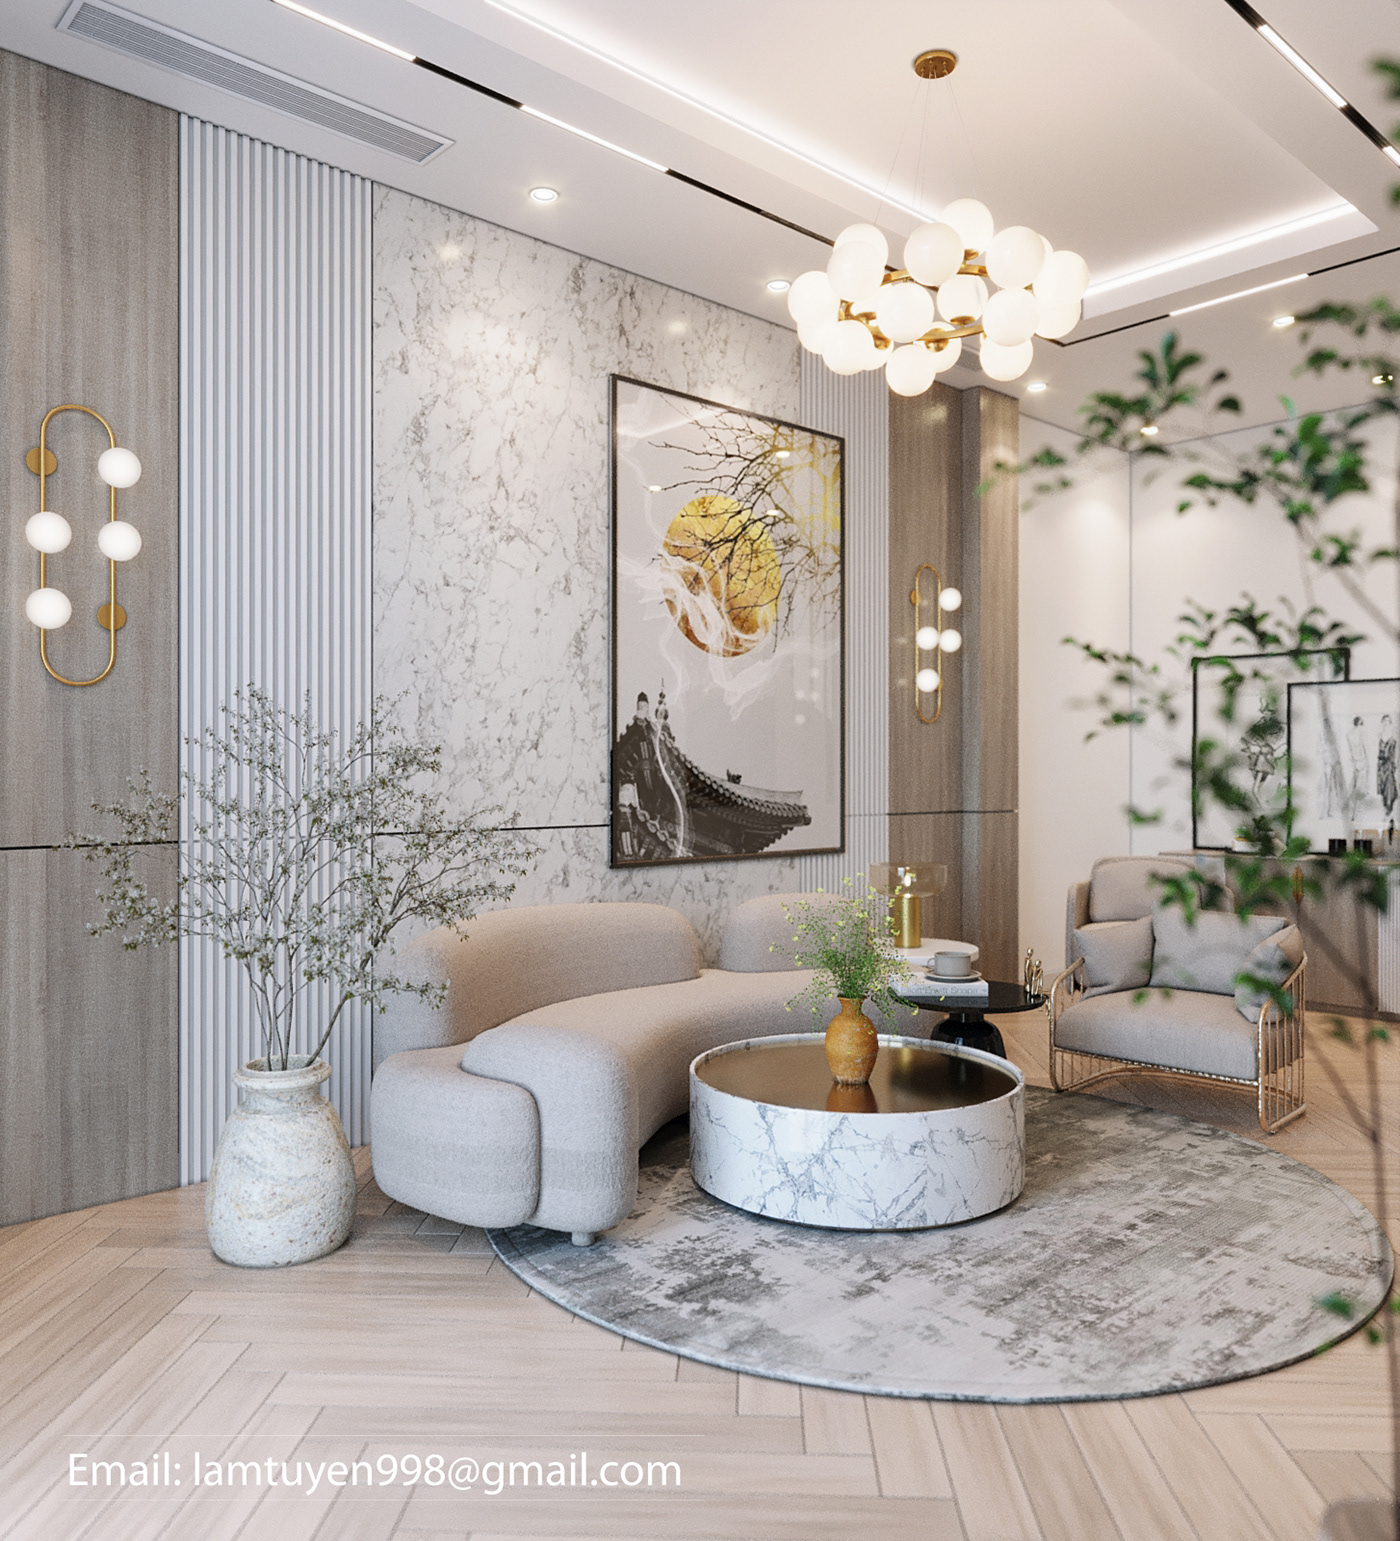 3dsmax corona render  interior design  living room design